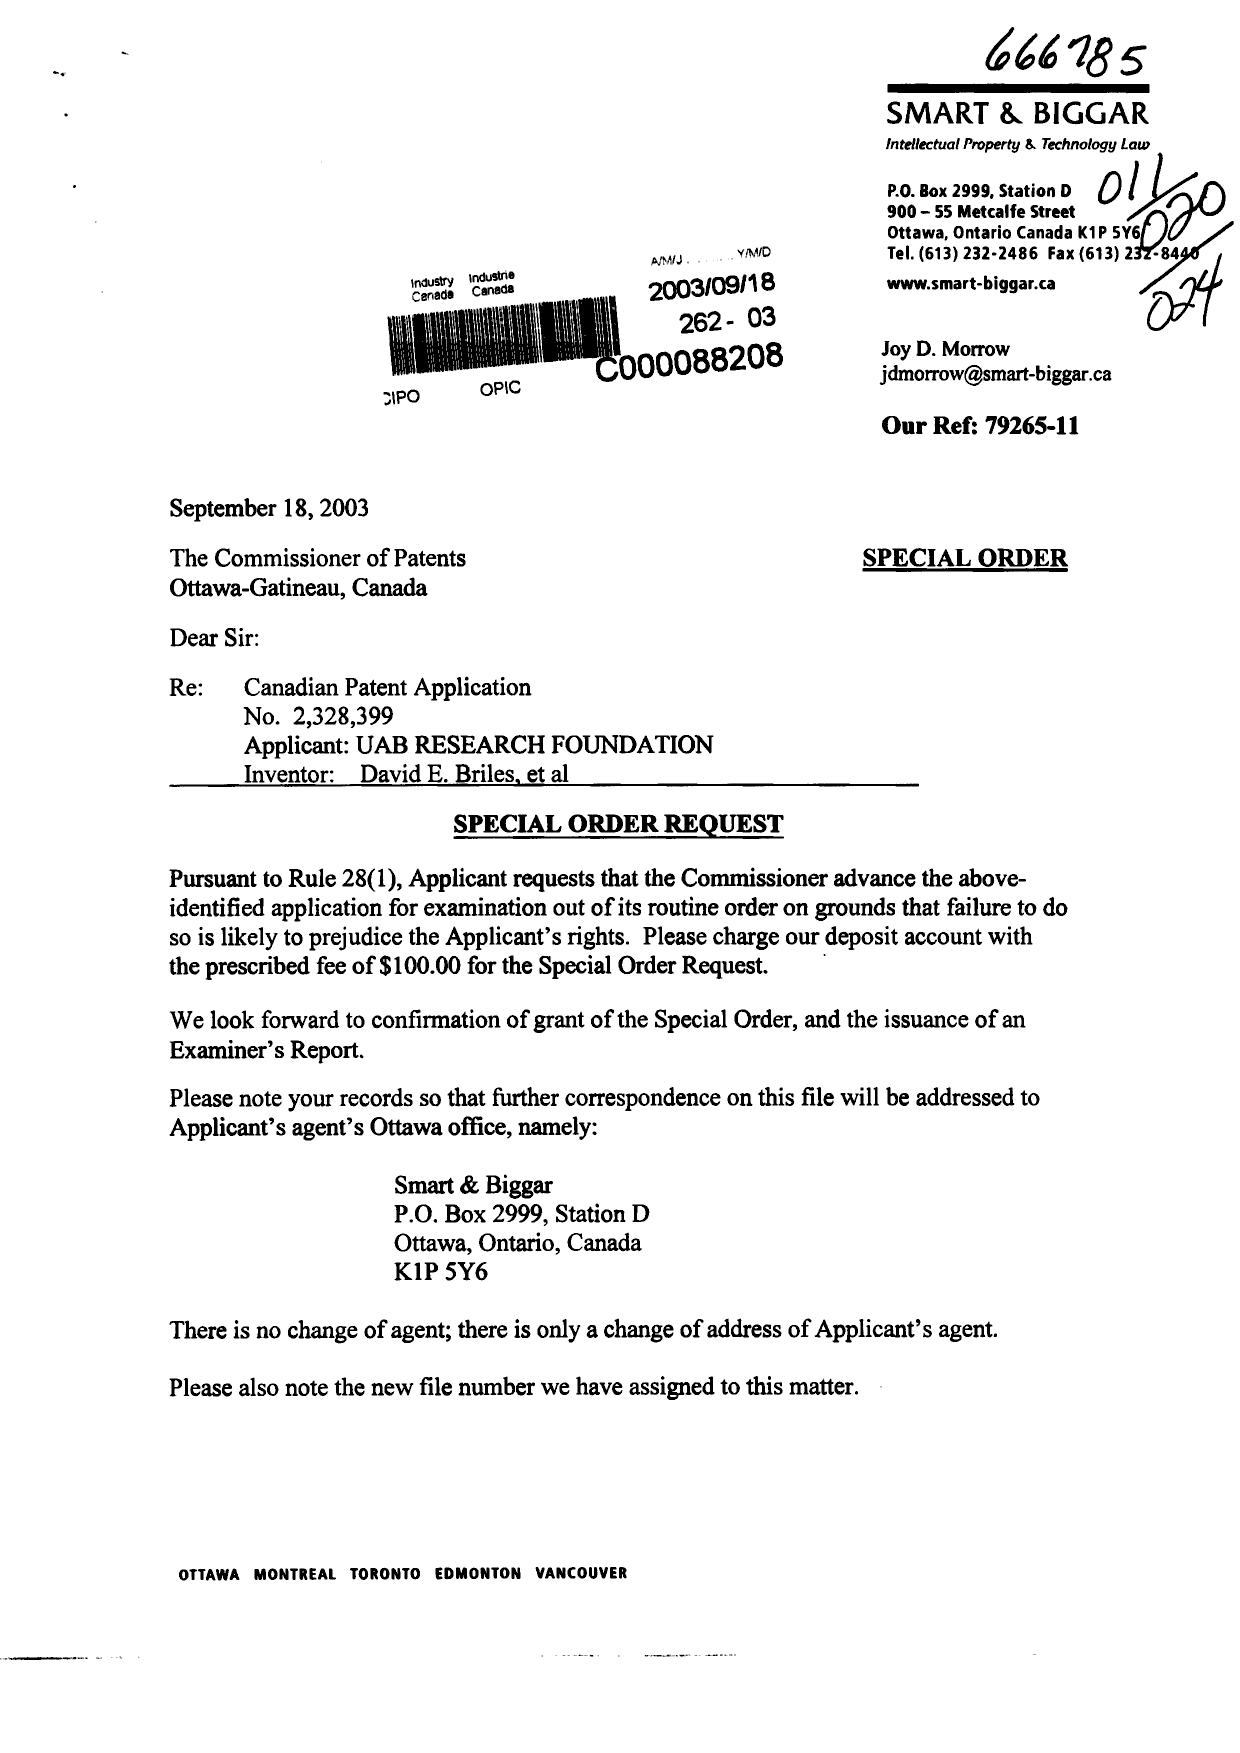 Canadian Patent Document 2328399. Correspondence 20030918. Image 1 of 2